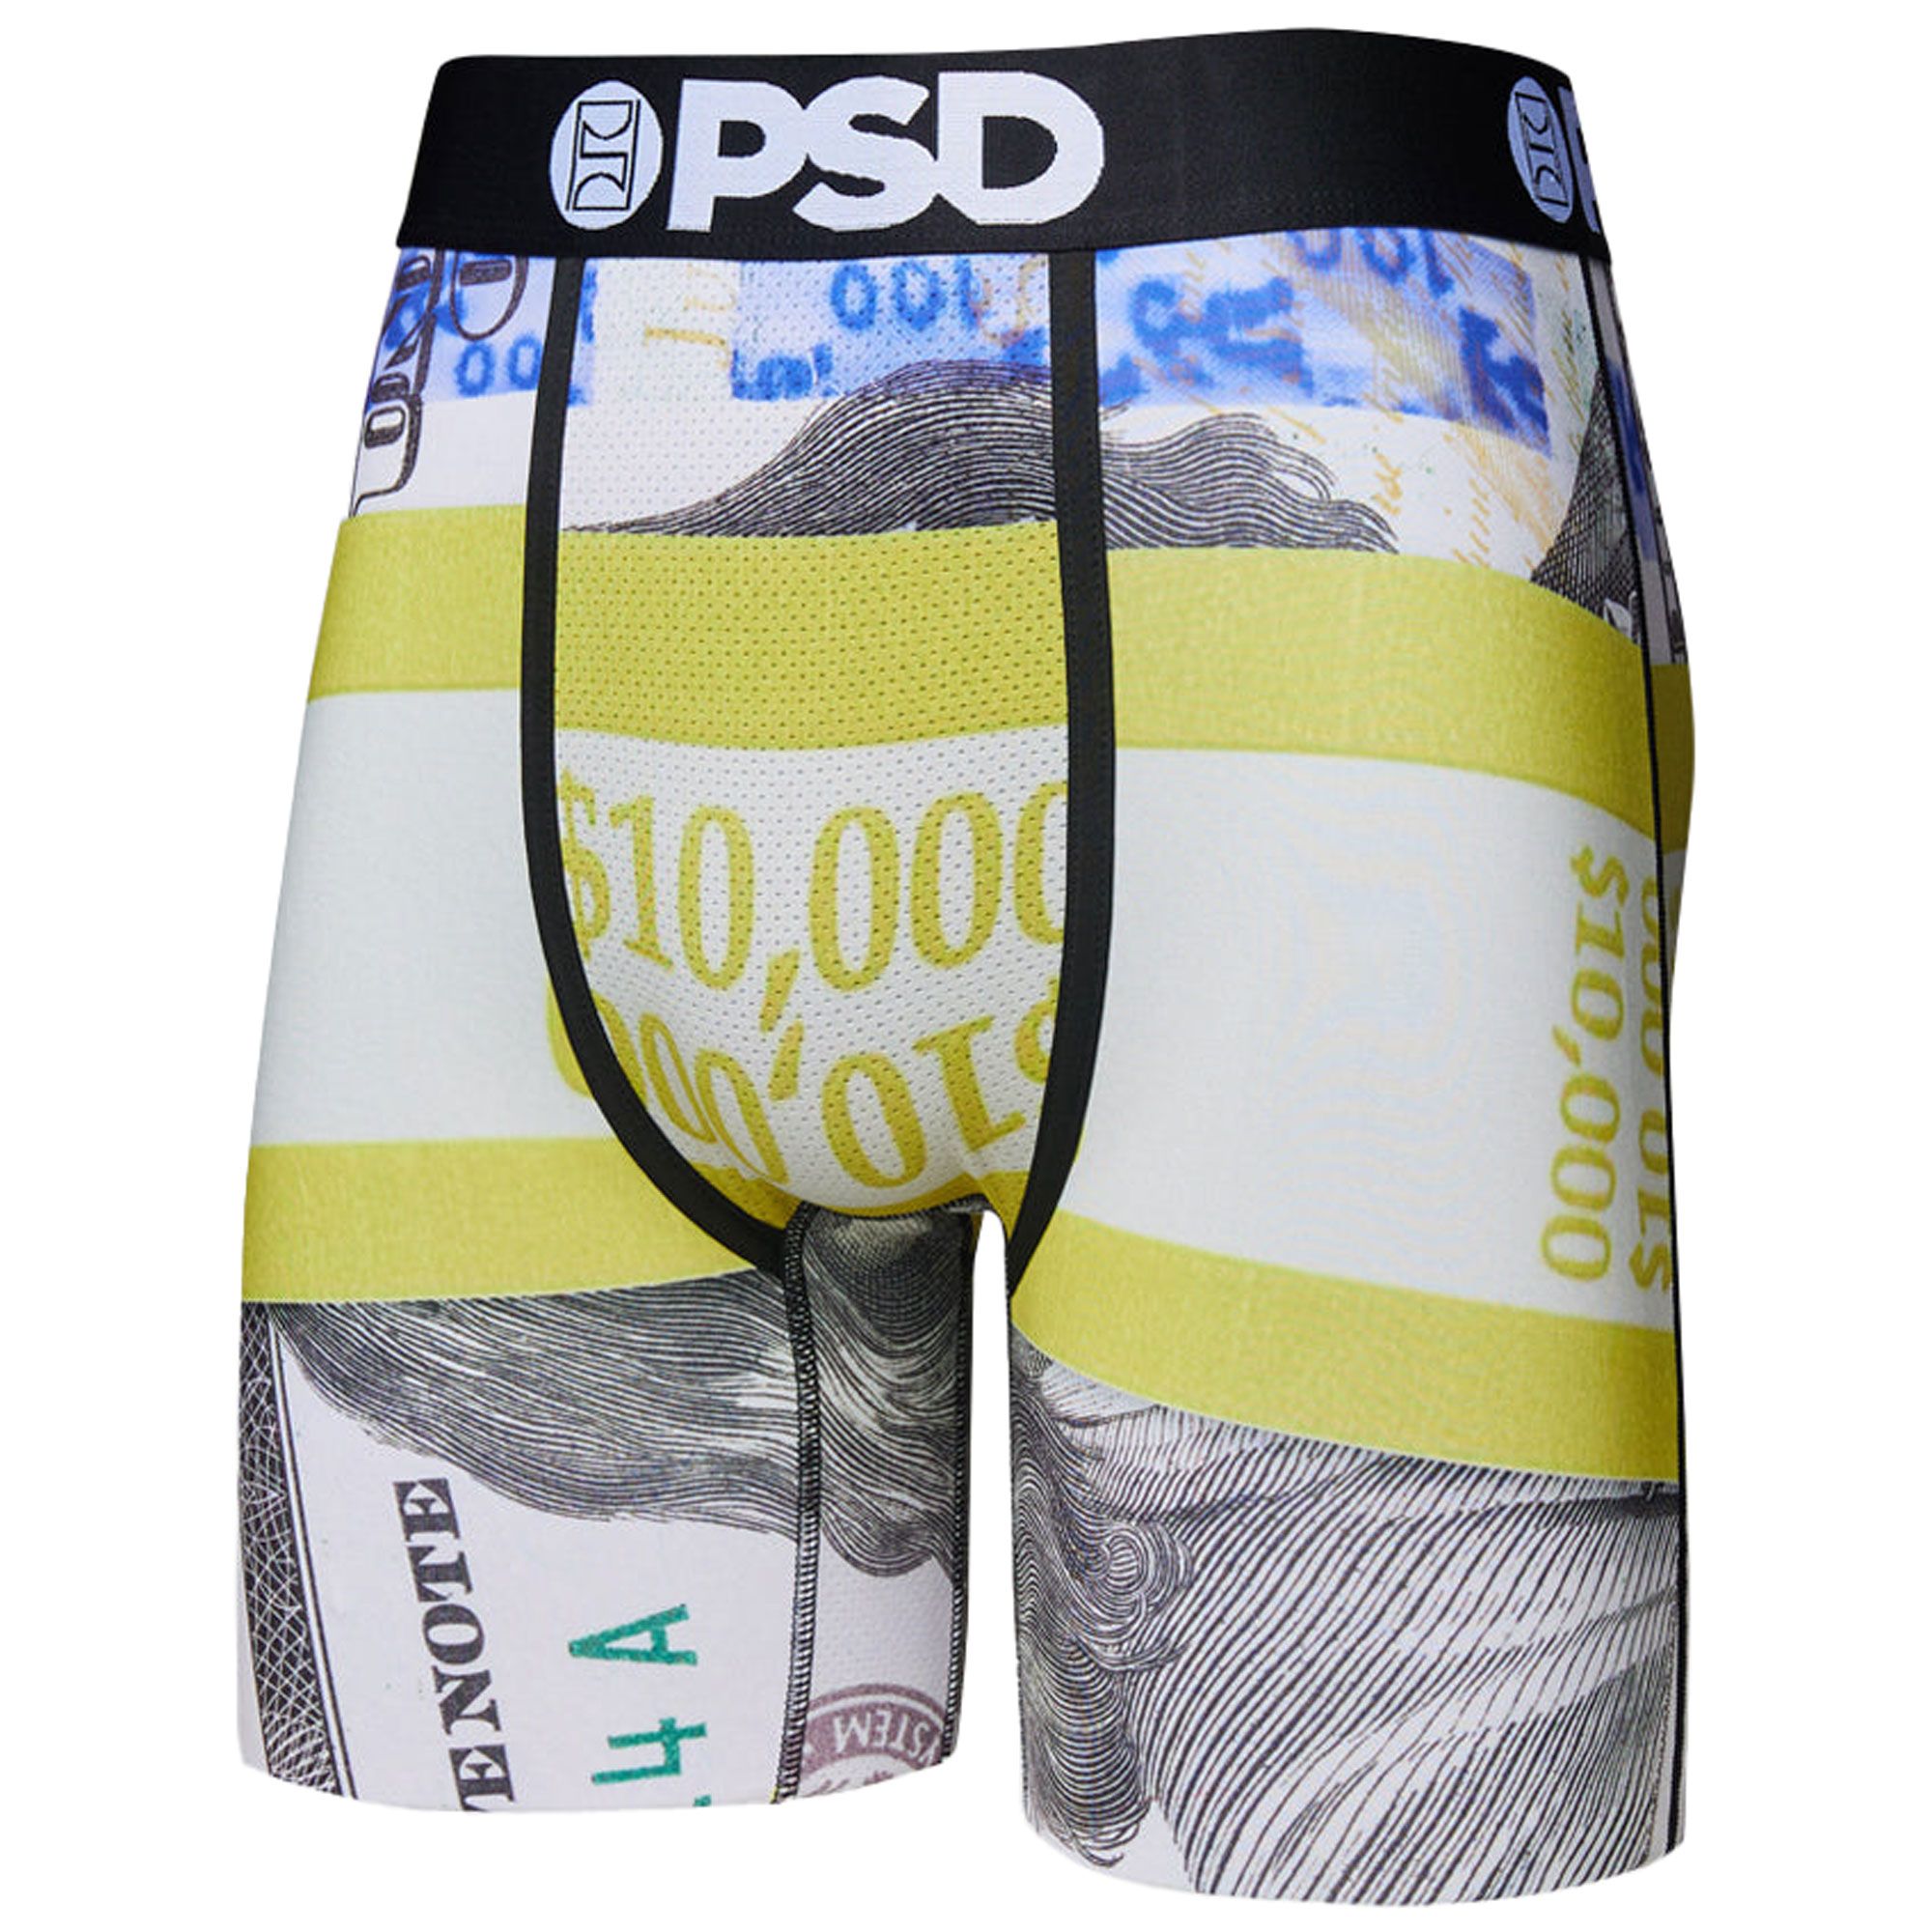 PSD Infrared Money Boxer Briefs 322180101 - Shiekh